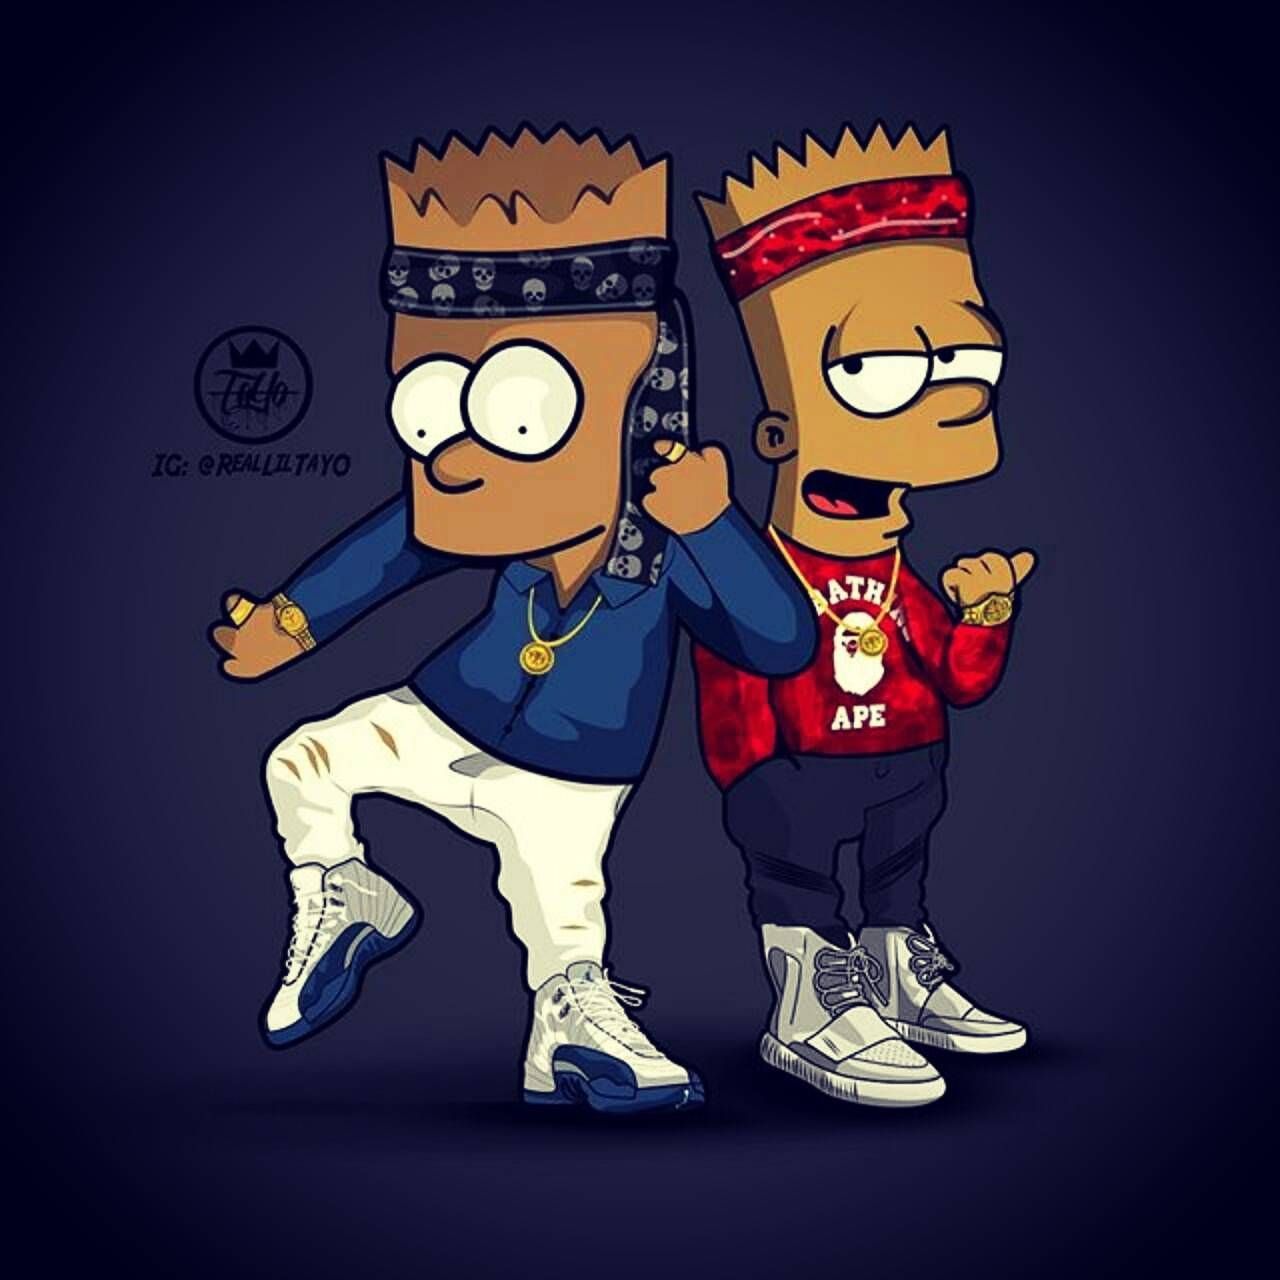 Bart Simpson Supreme Wallpaper